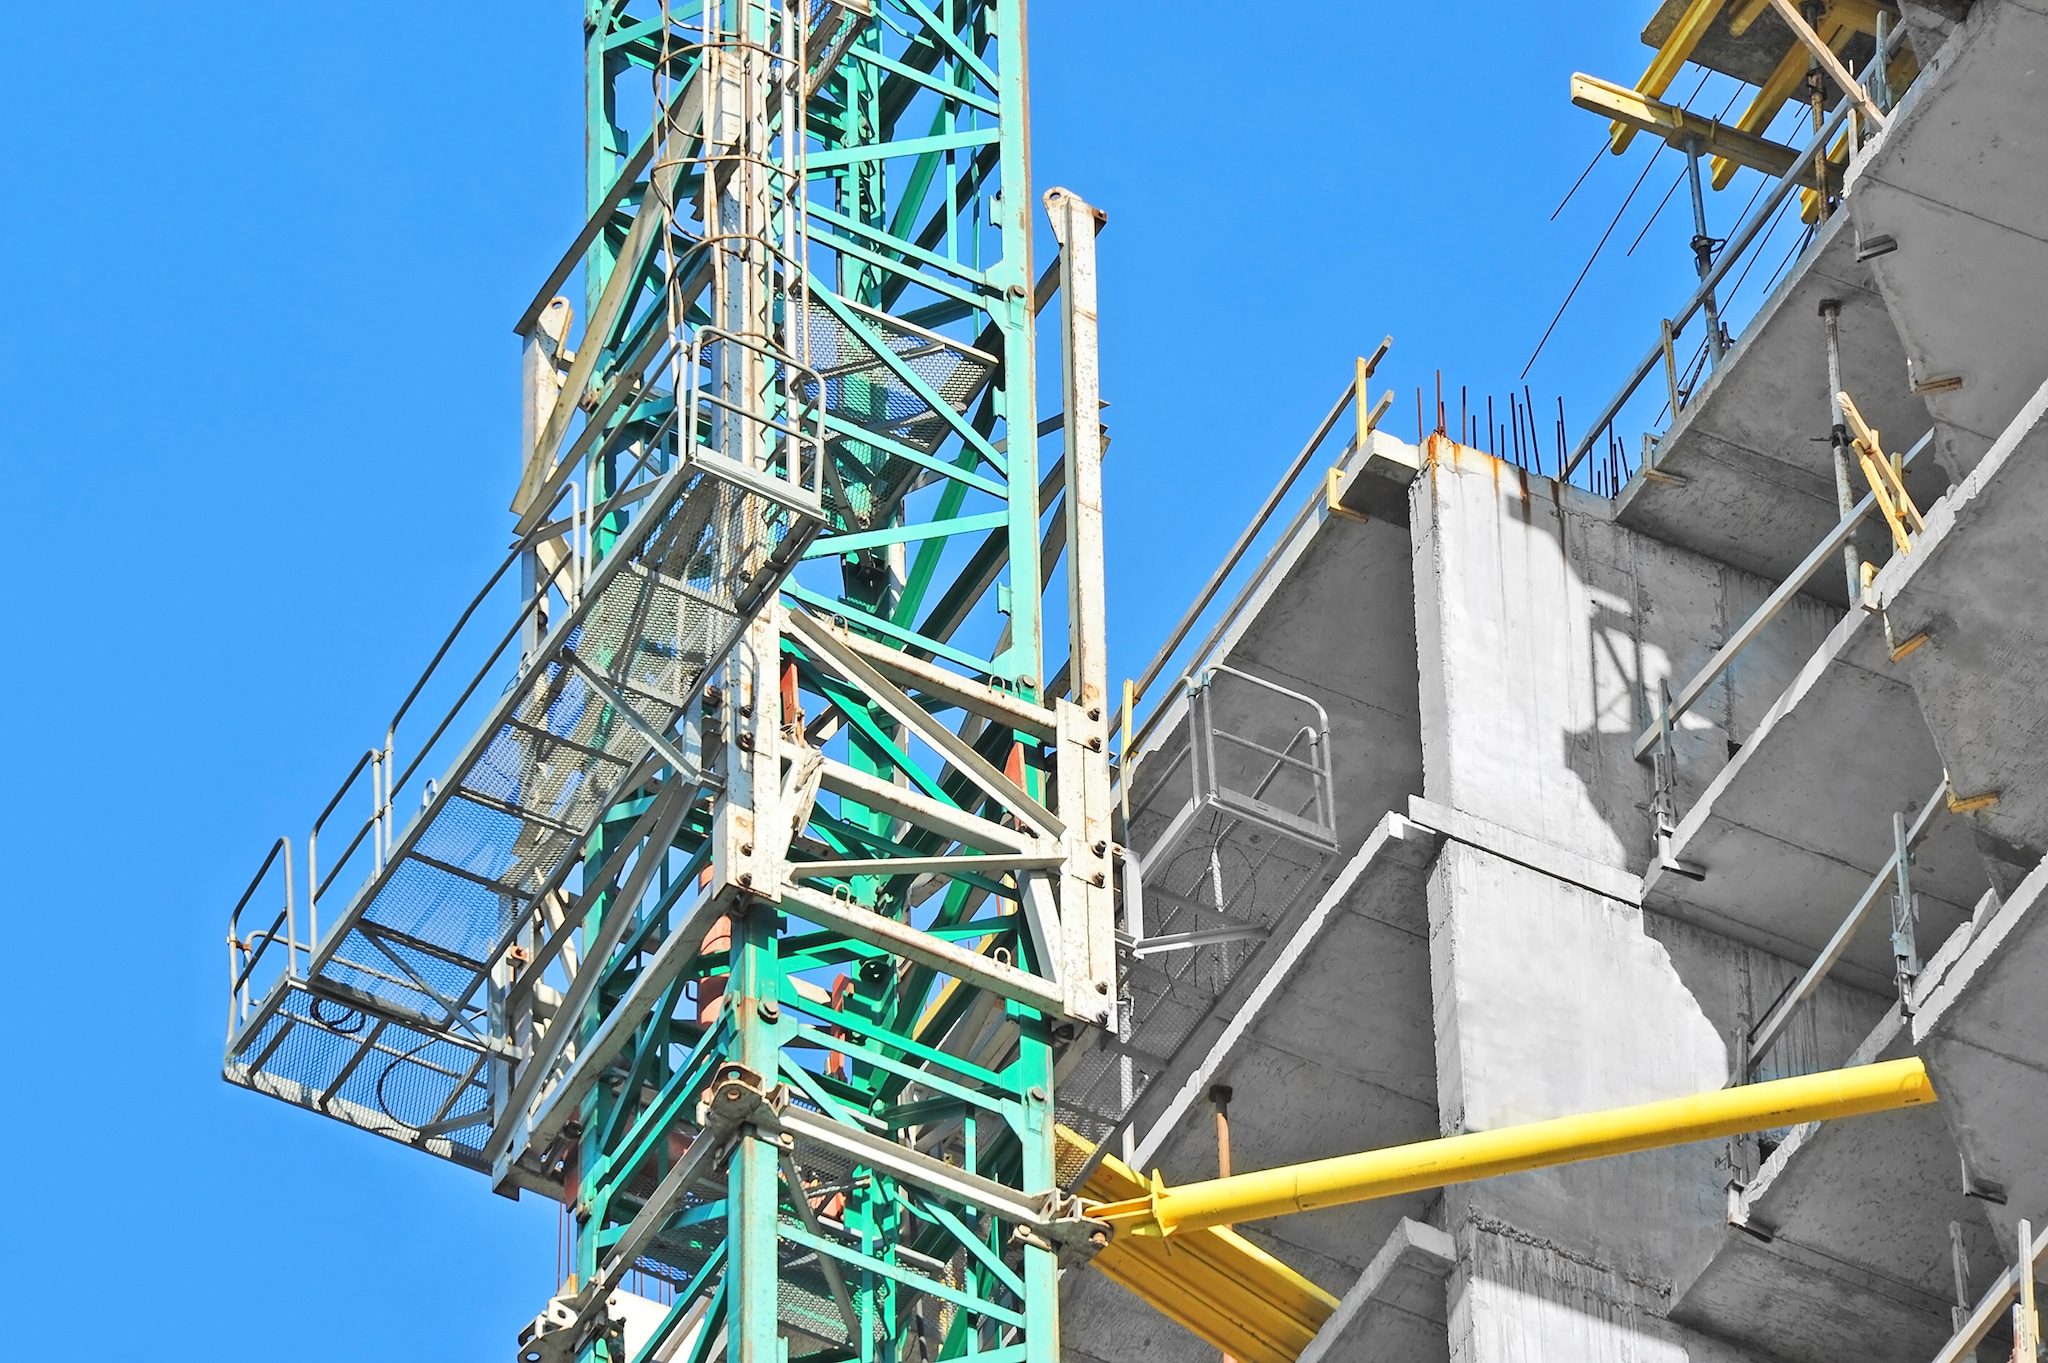 Mast climbing work platform is next to a building under construction.